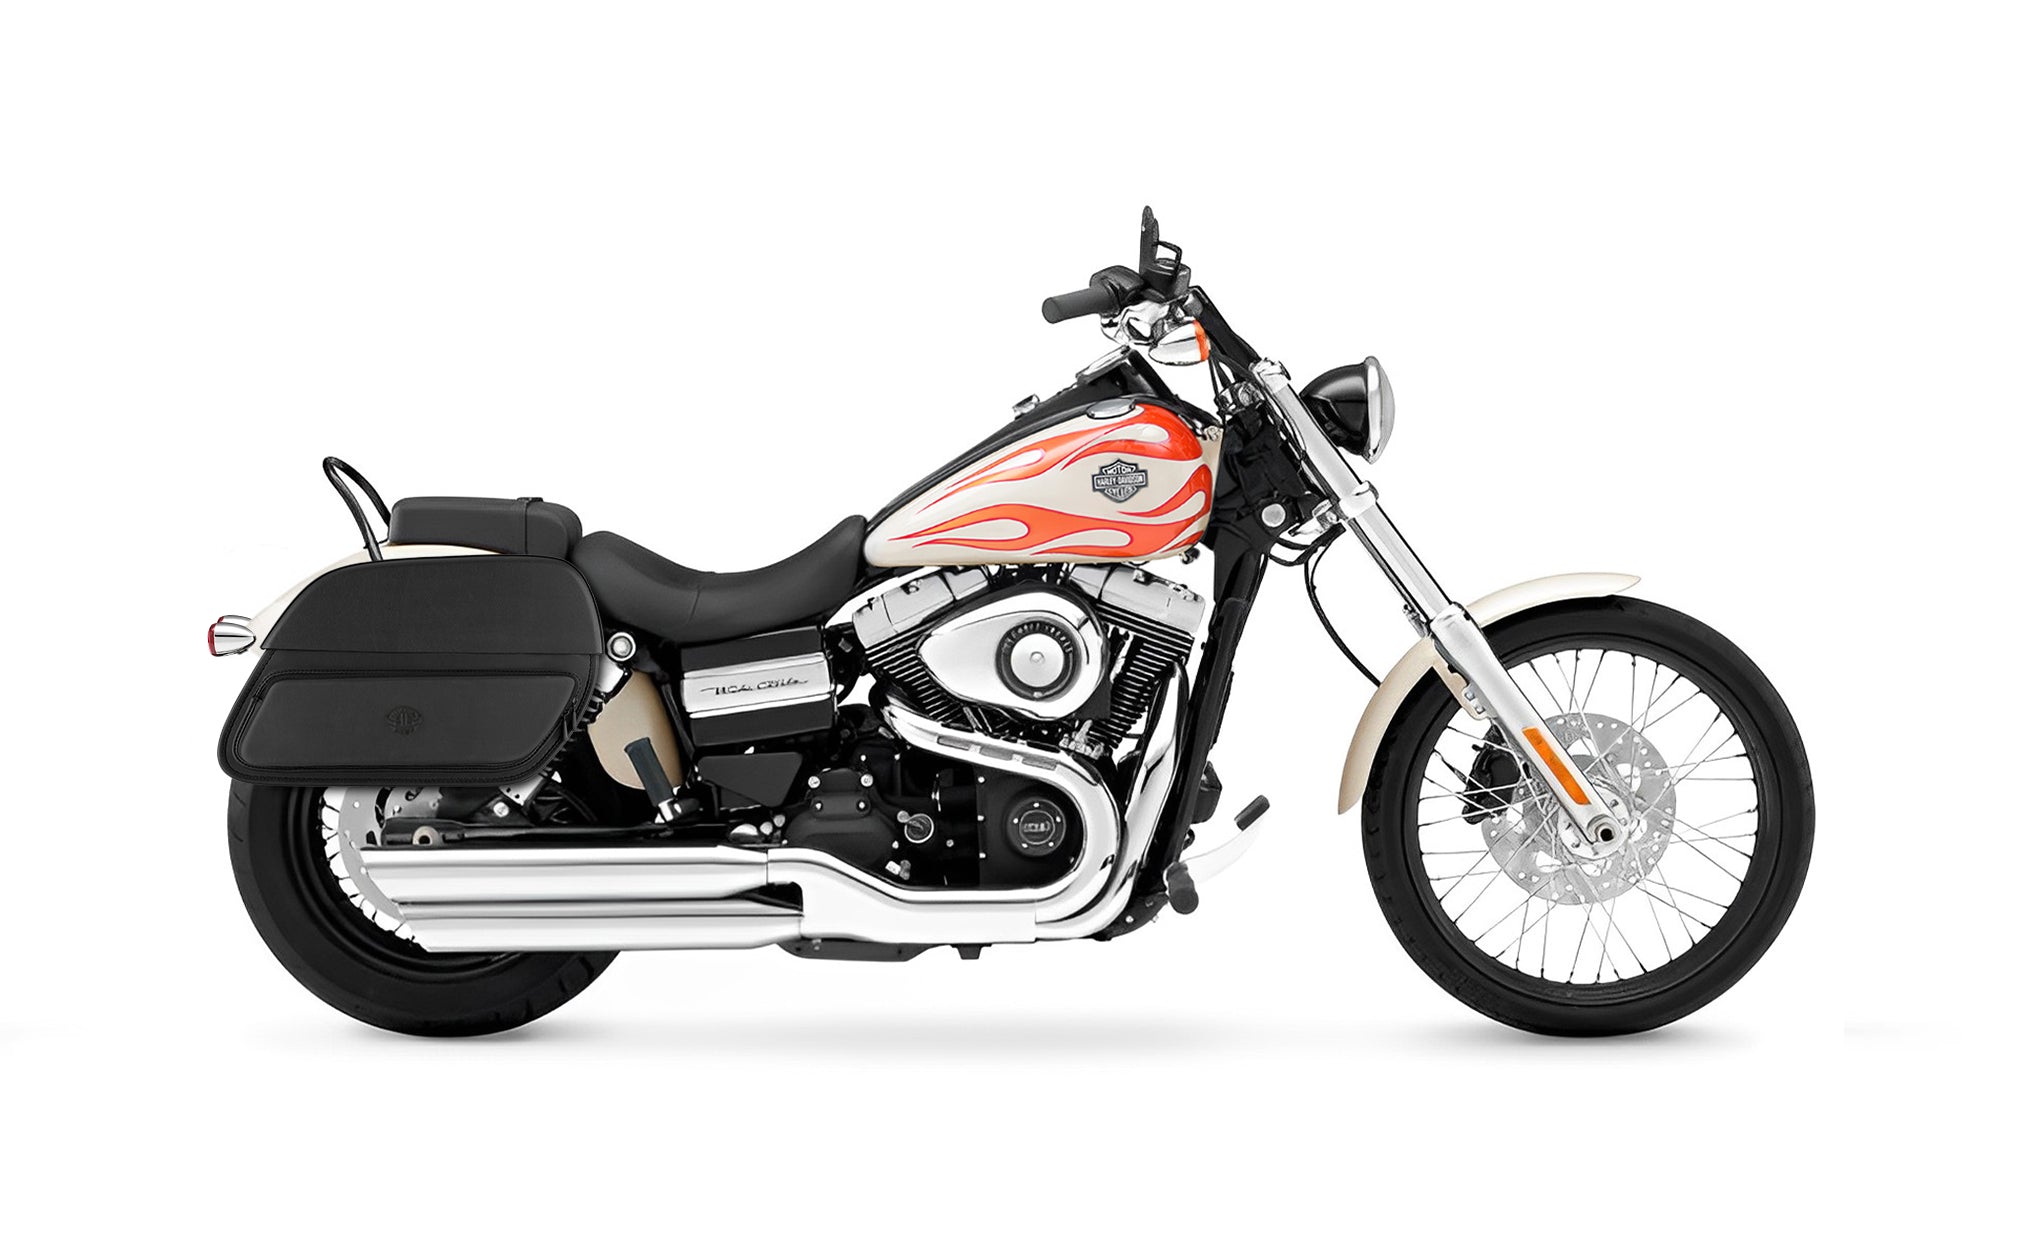 Viking Pantheon Large Leather Motorcycle Saddlebags For Harley Dyna Wide Glide Fxdwg I on Bike Photo @expand